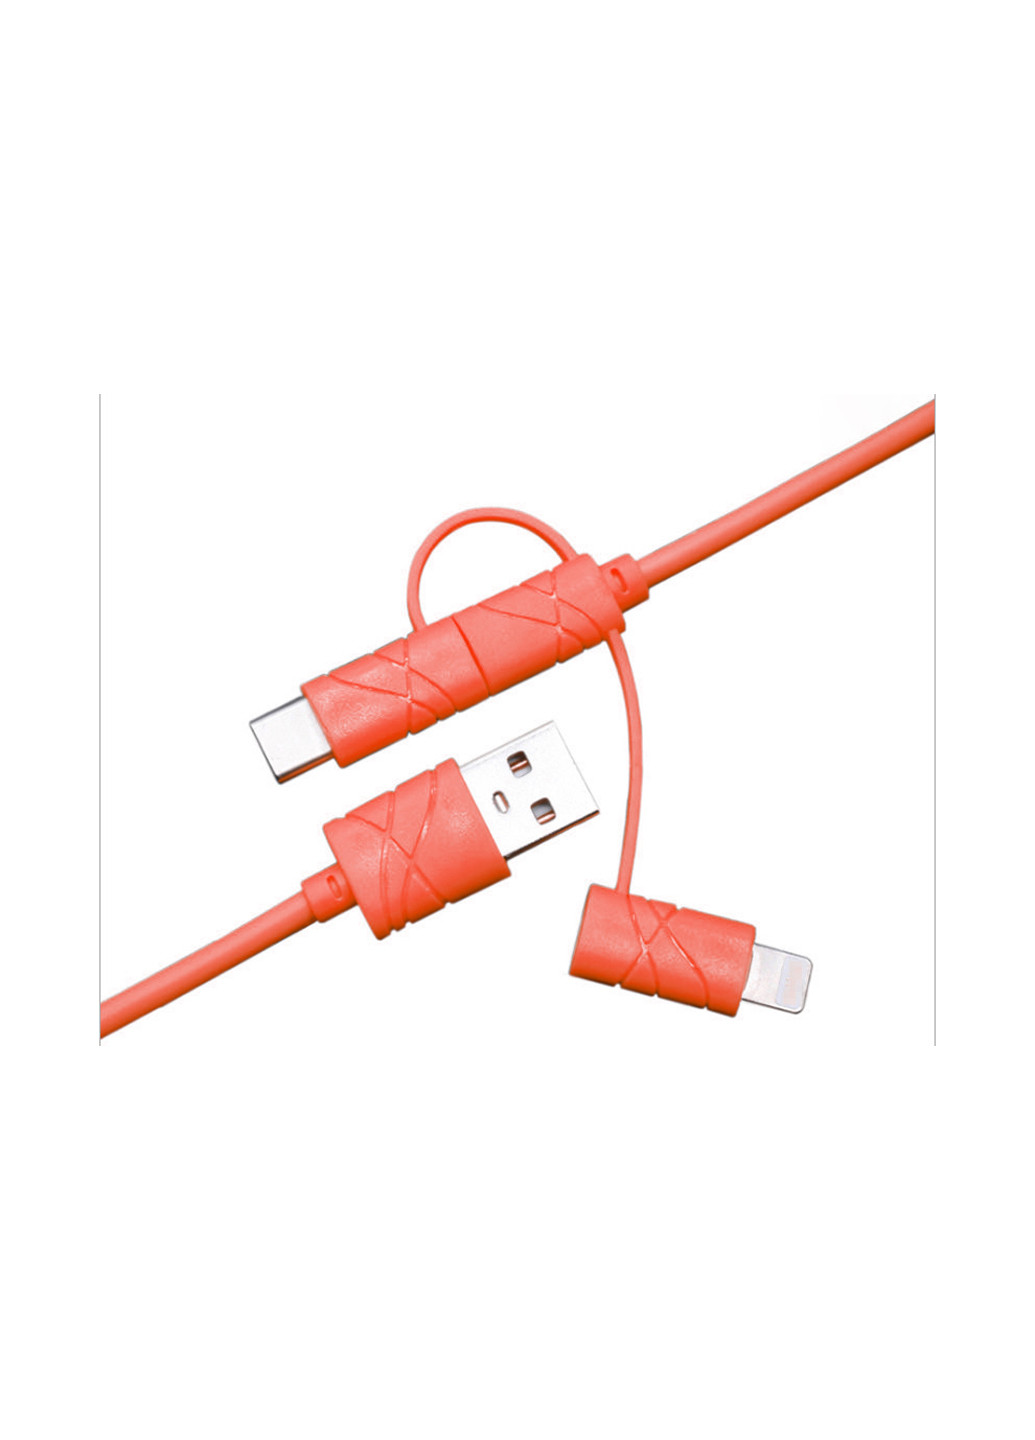 Кабель USB Red, 3 в 1 - Lightning, Micro USB, Type-C, 1 м XoKo sc-310 (132572890)